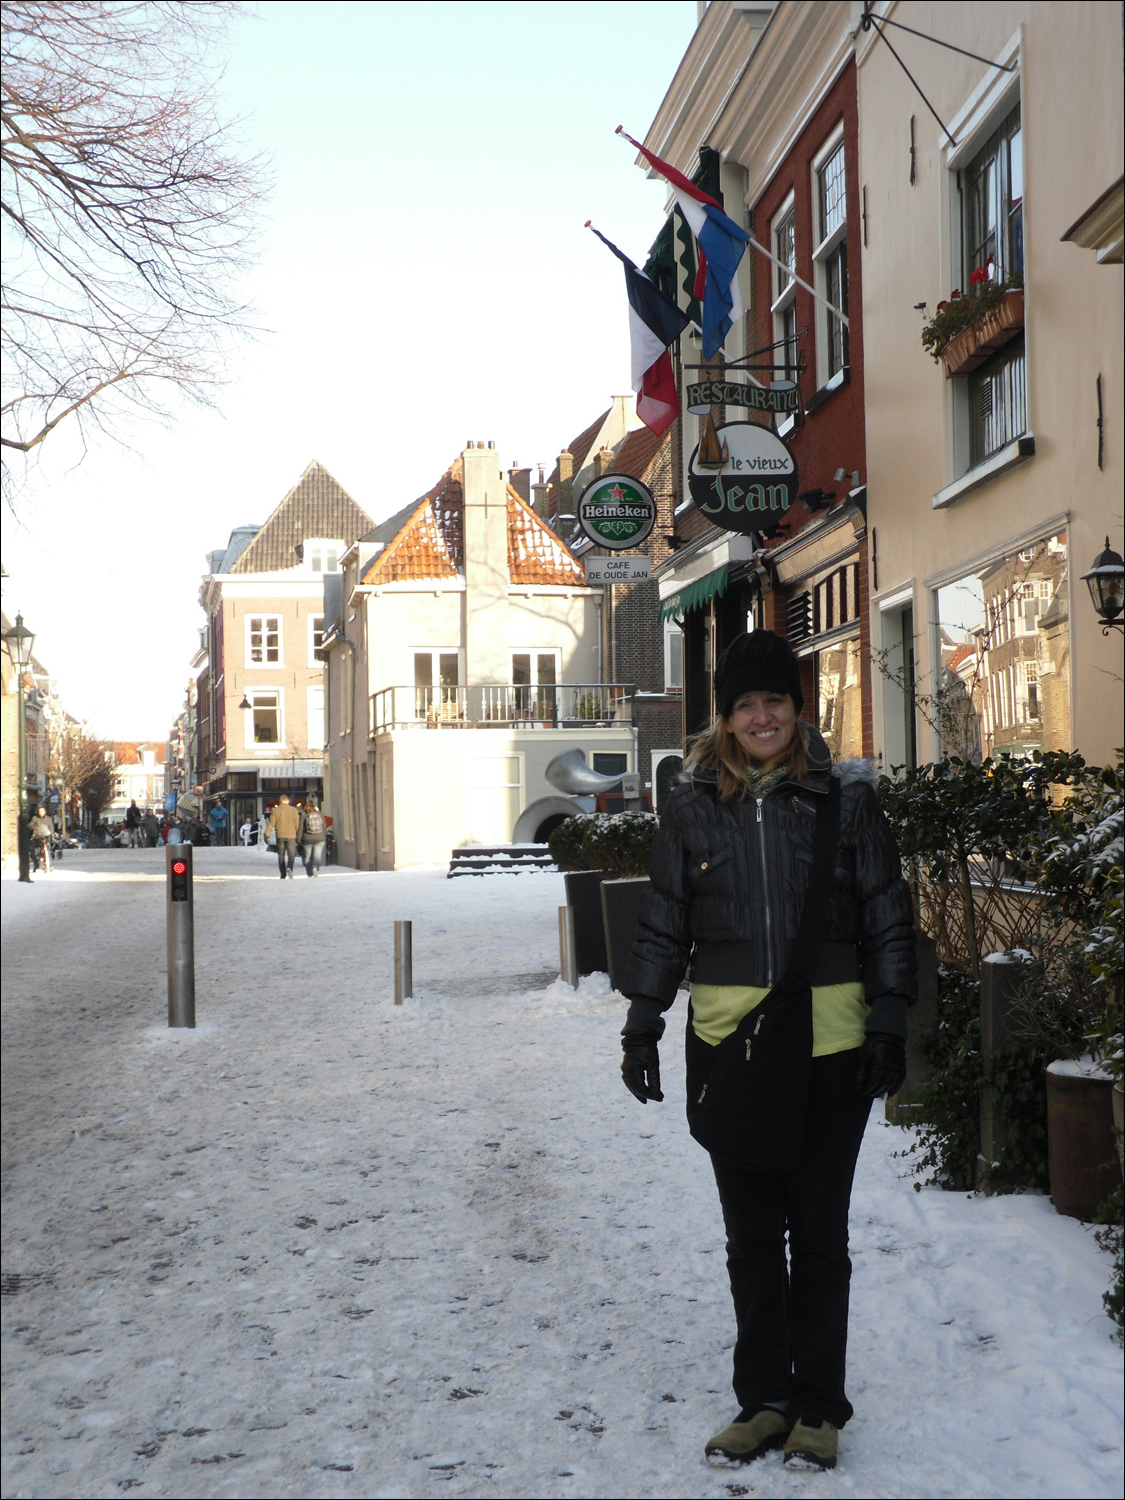 Sondra on street in Delft after leaving Prinsenhof museum